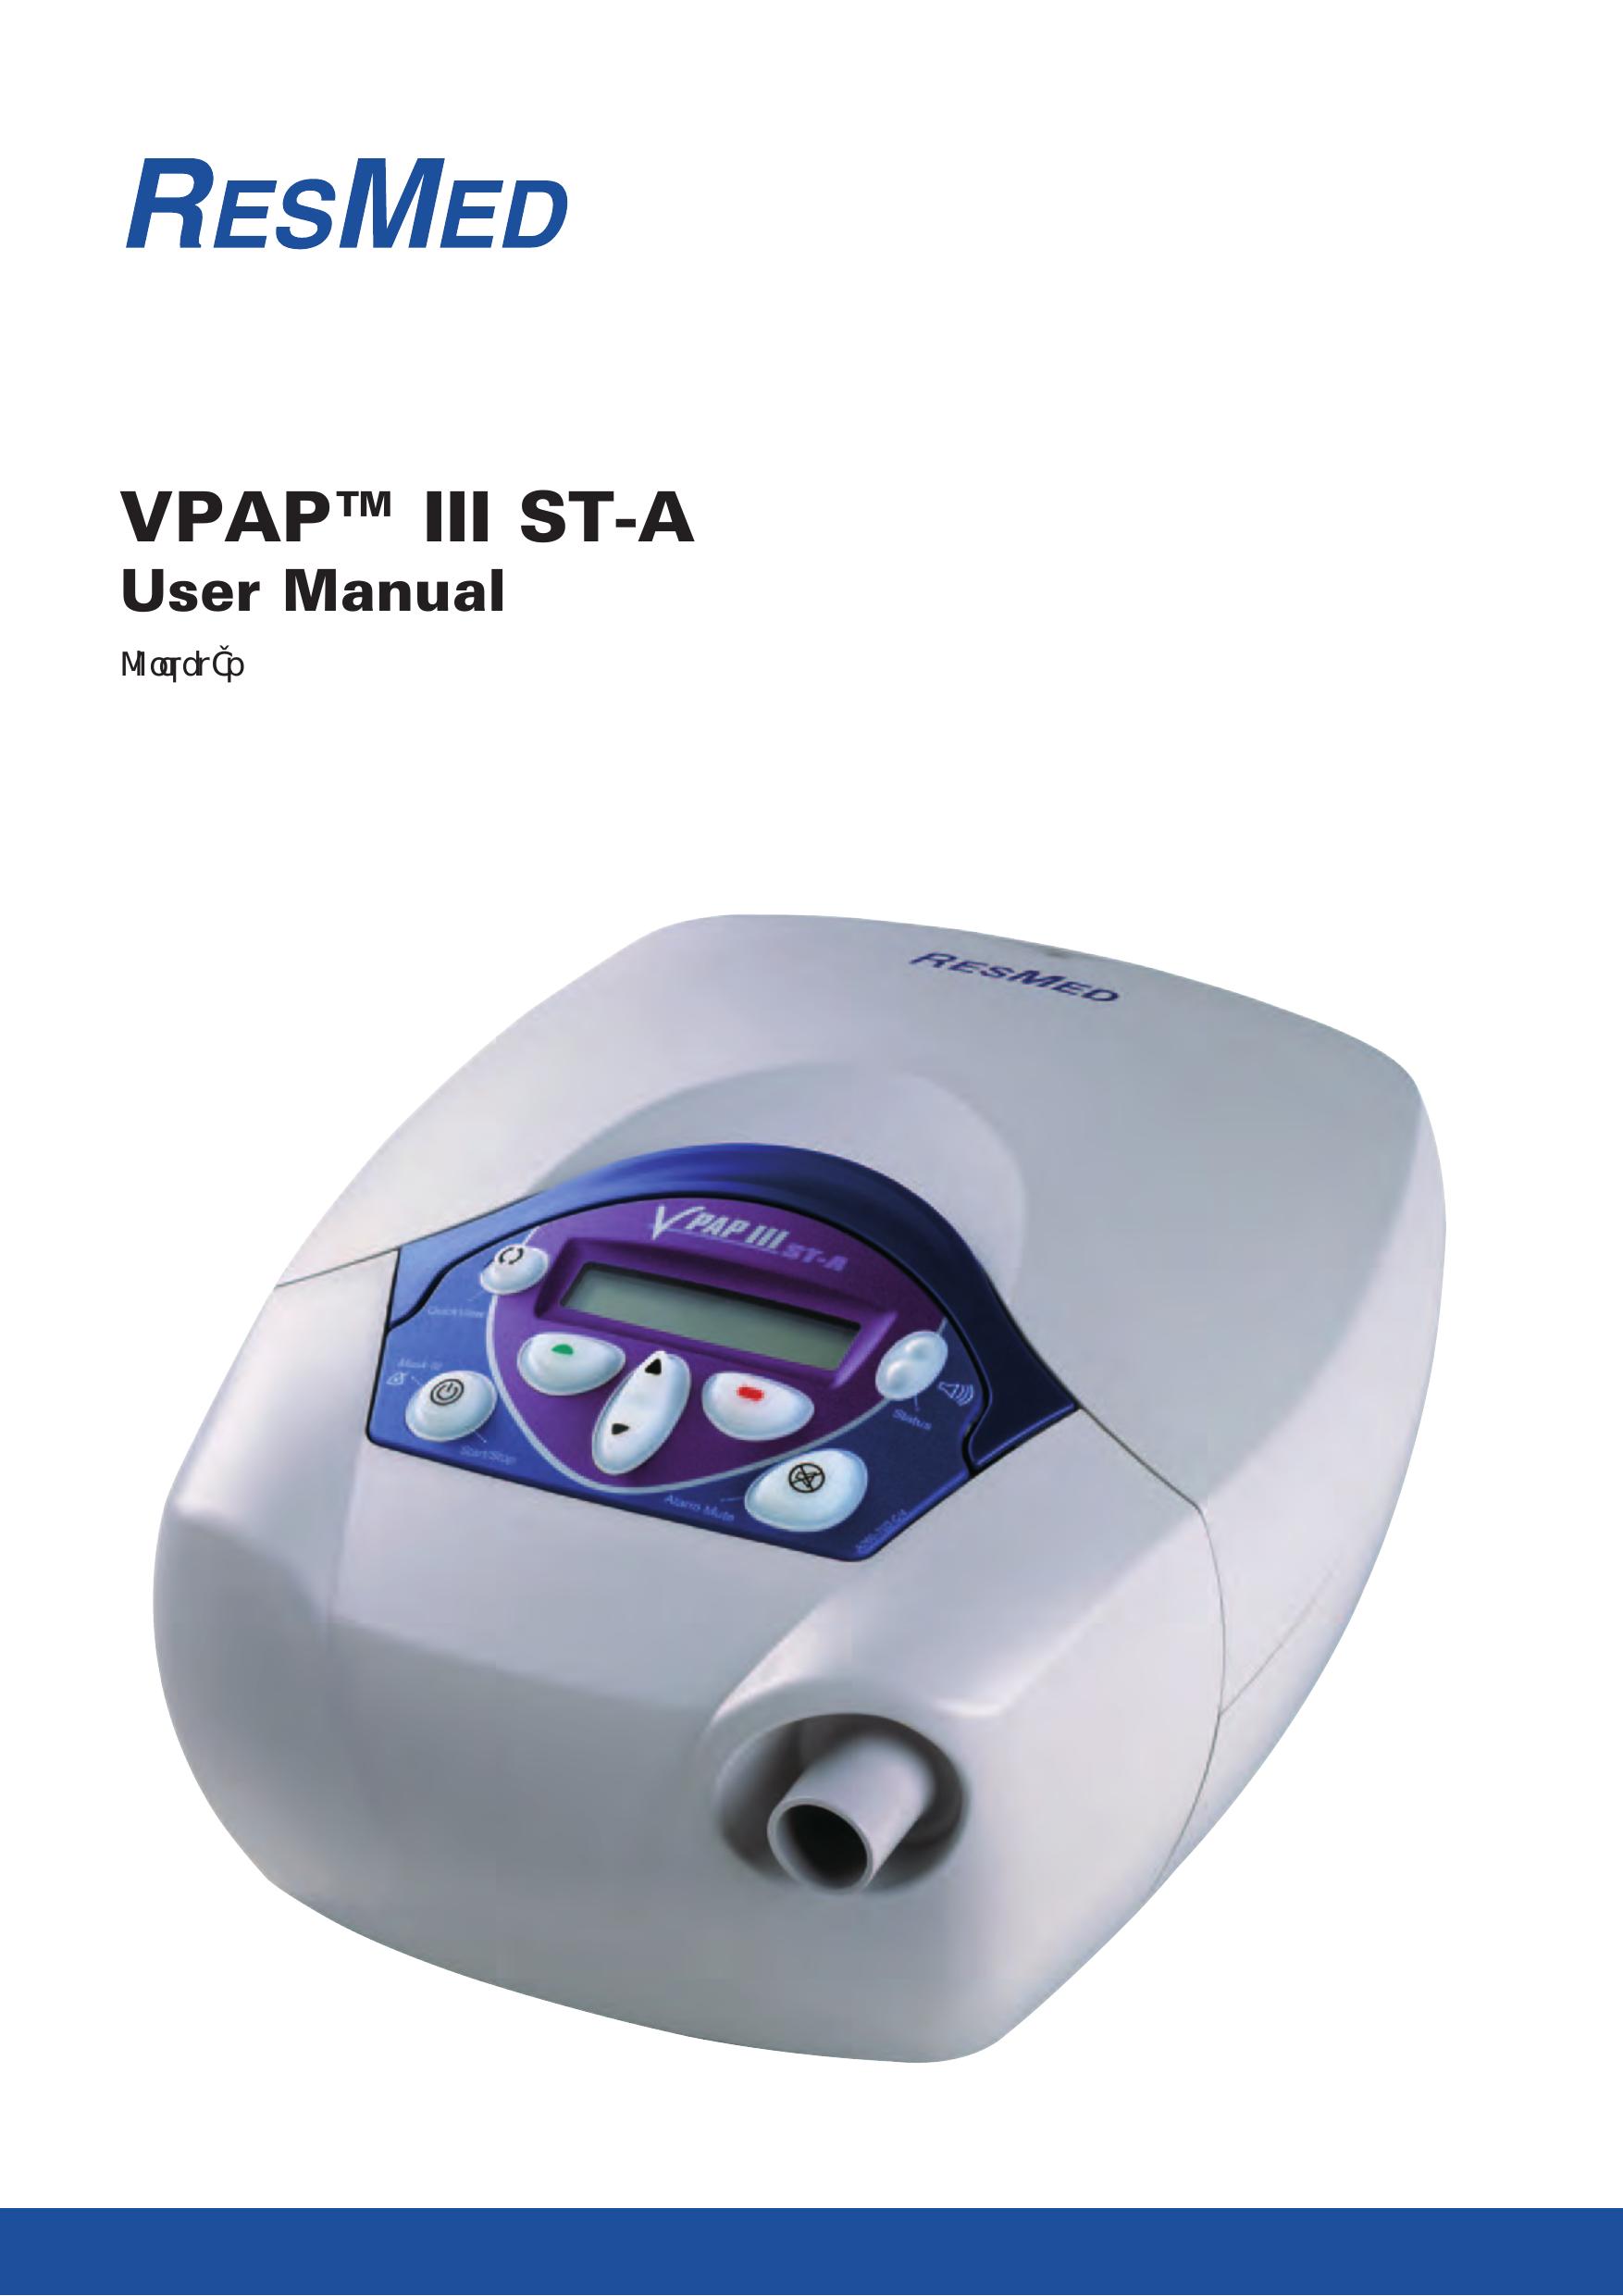 ResMed VPAP III ST-A Oxygen Equipment User Manual